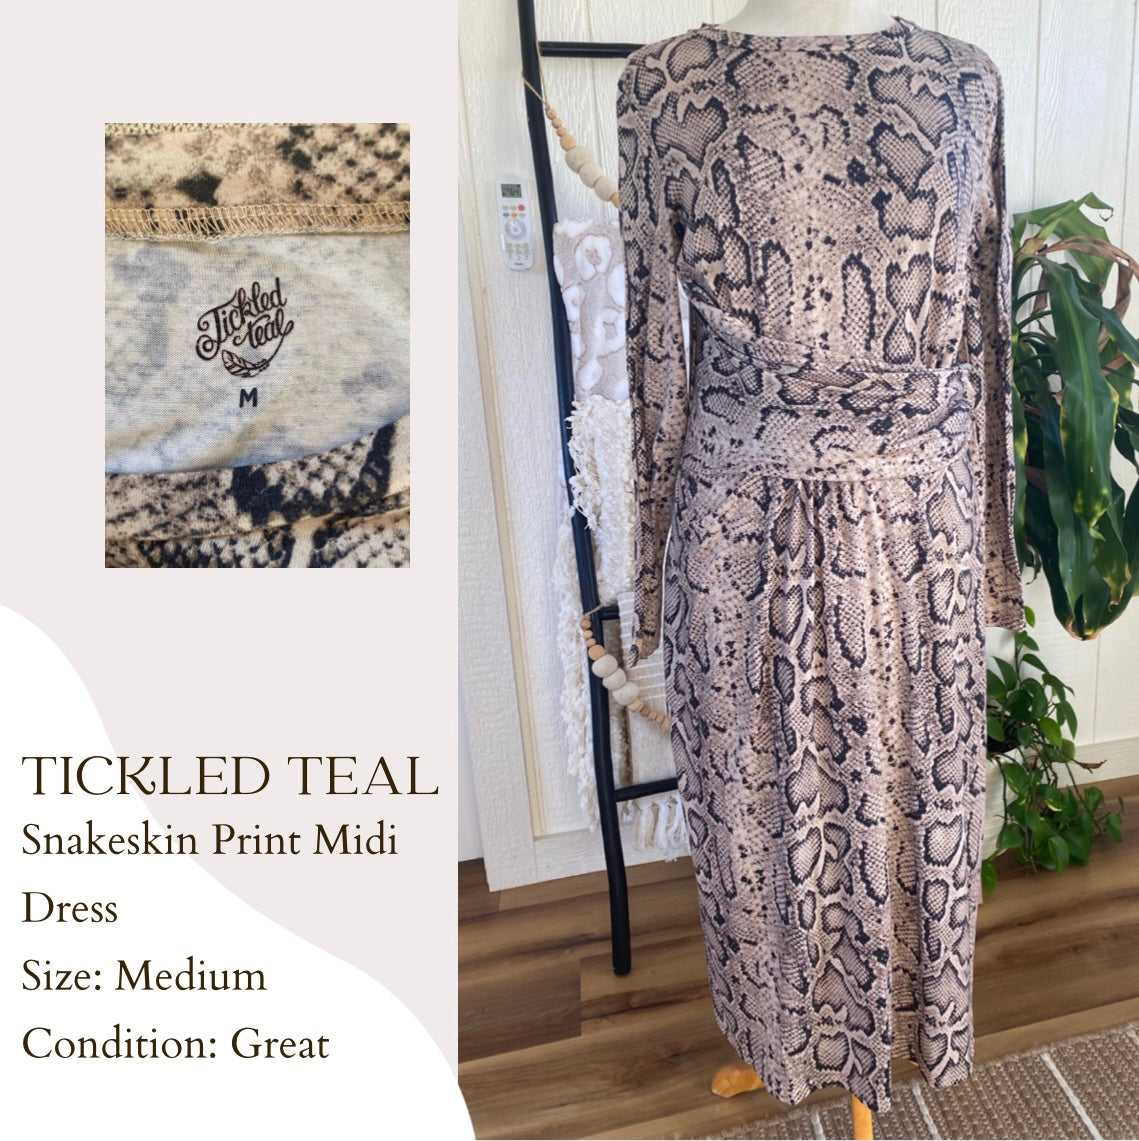 Tickled Teal Snakeskin Print Midi Dress